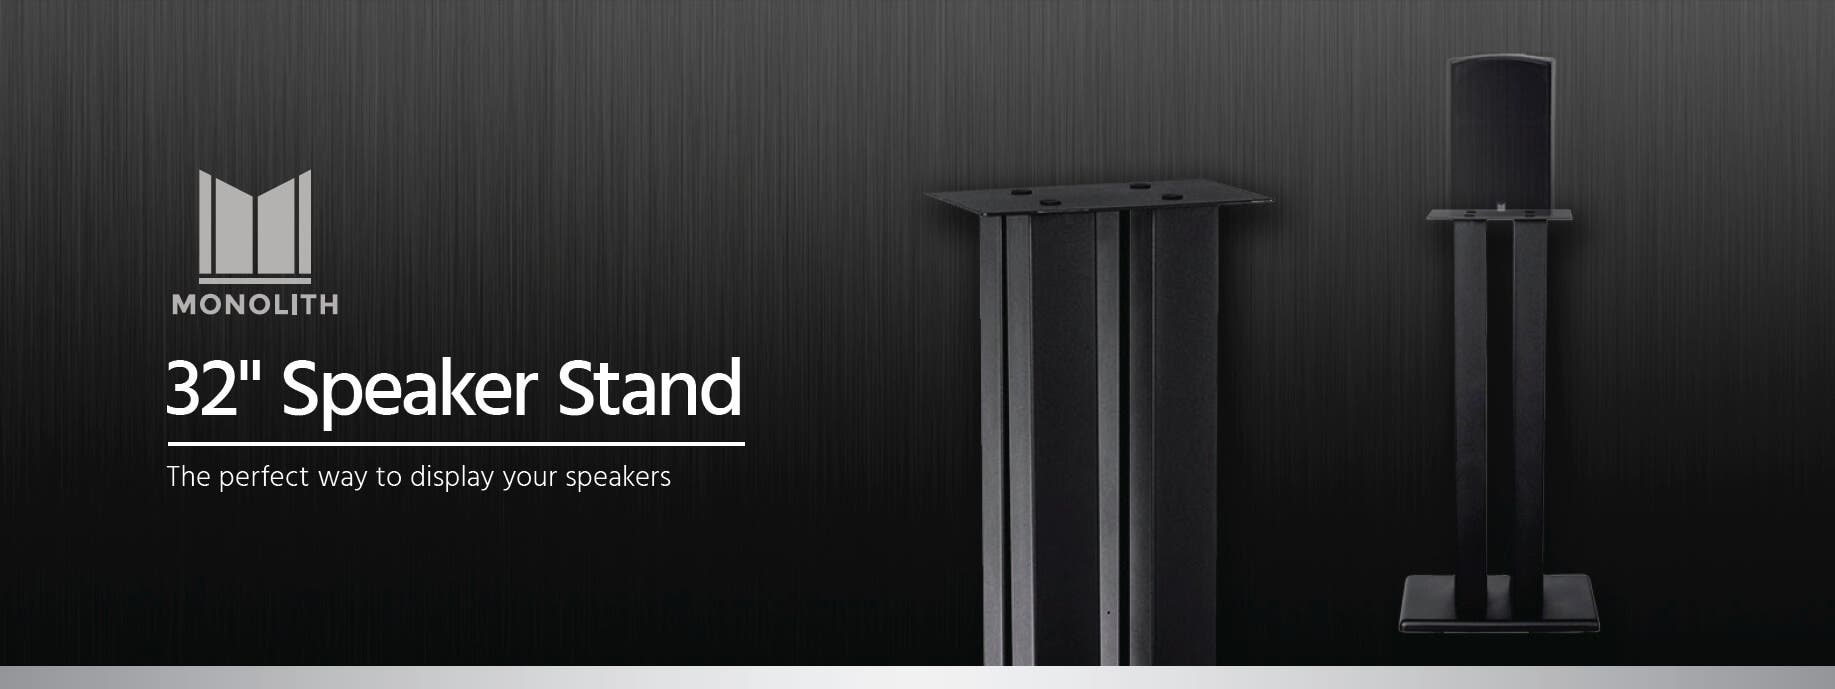 Monolith Speaker Stand